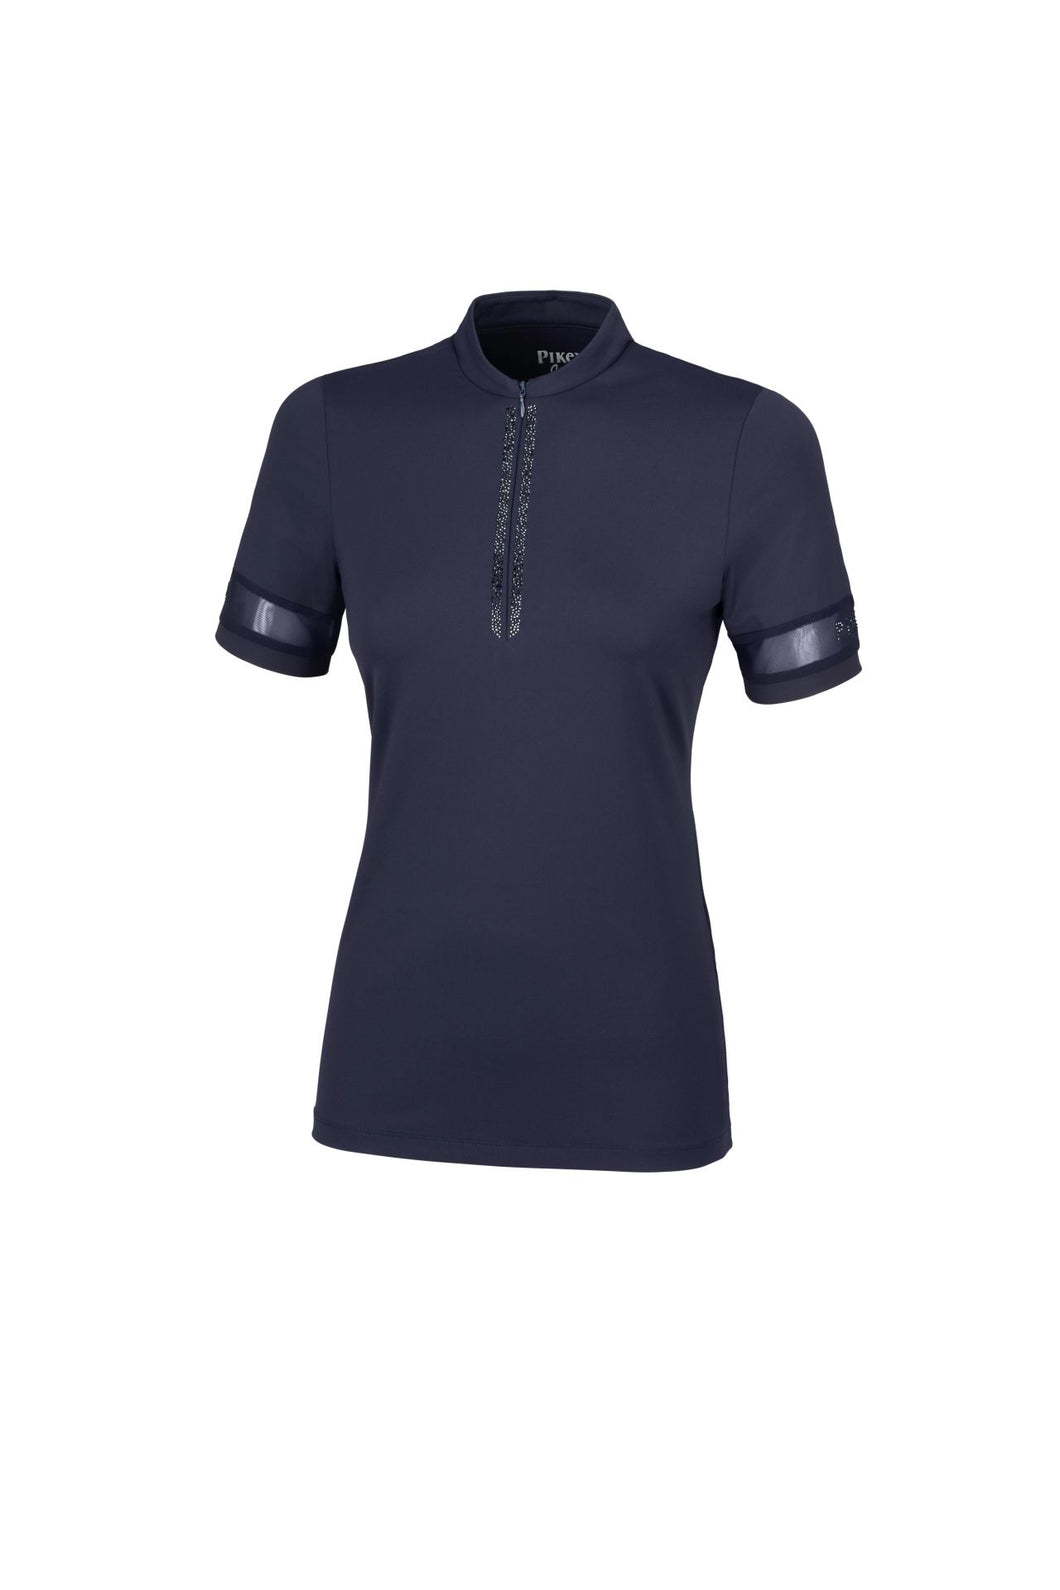 Pikeur Valine Shirt Selection S/S 23 nightblue